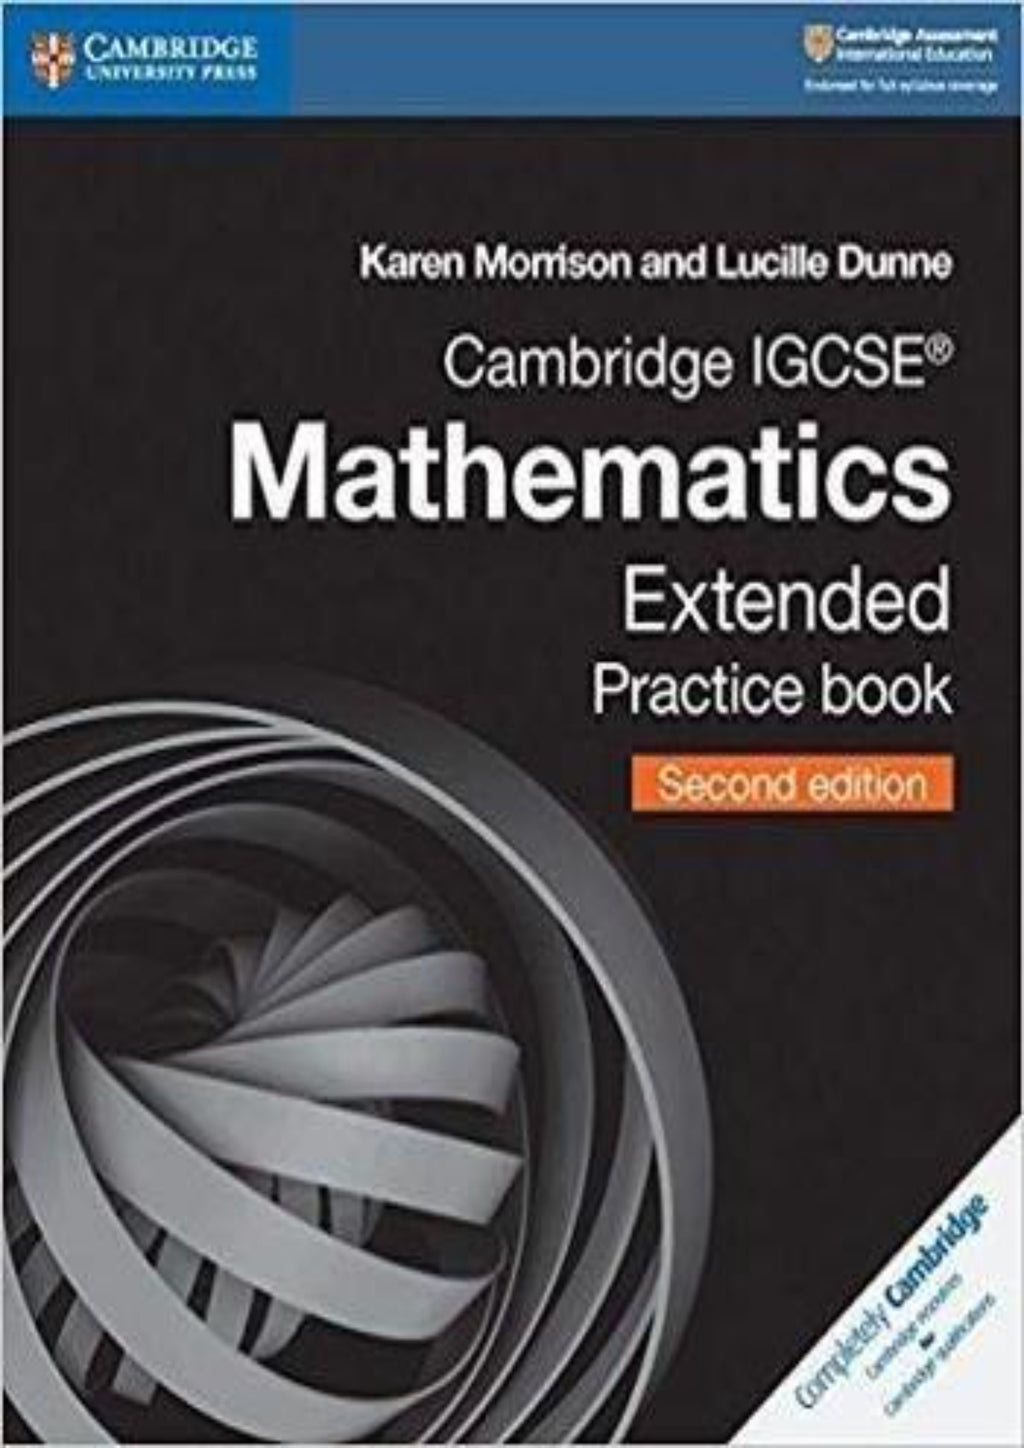 Cambridge IGCSE Mathematics (0580) Extended Practice Book (2nd Edition)